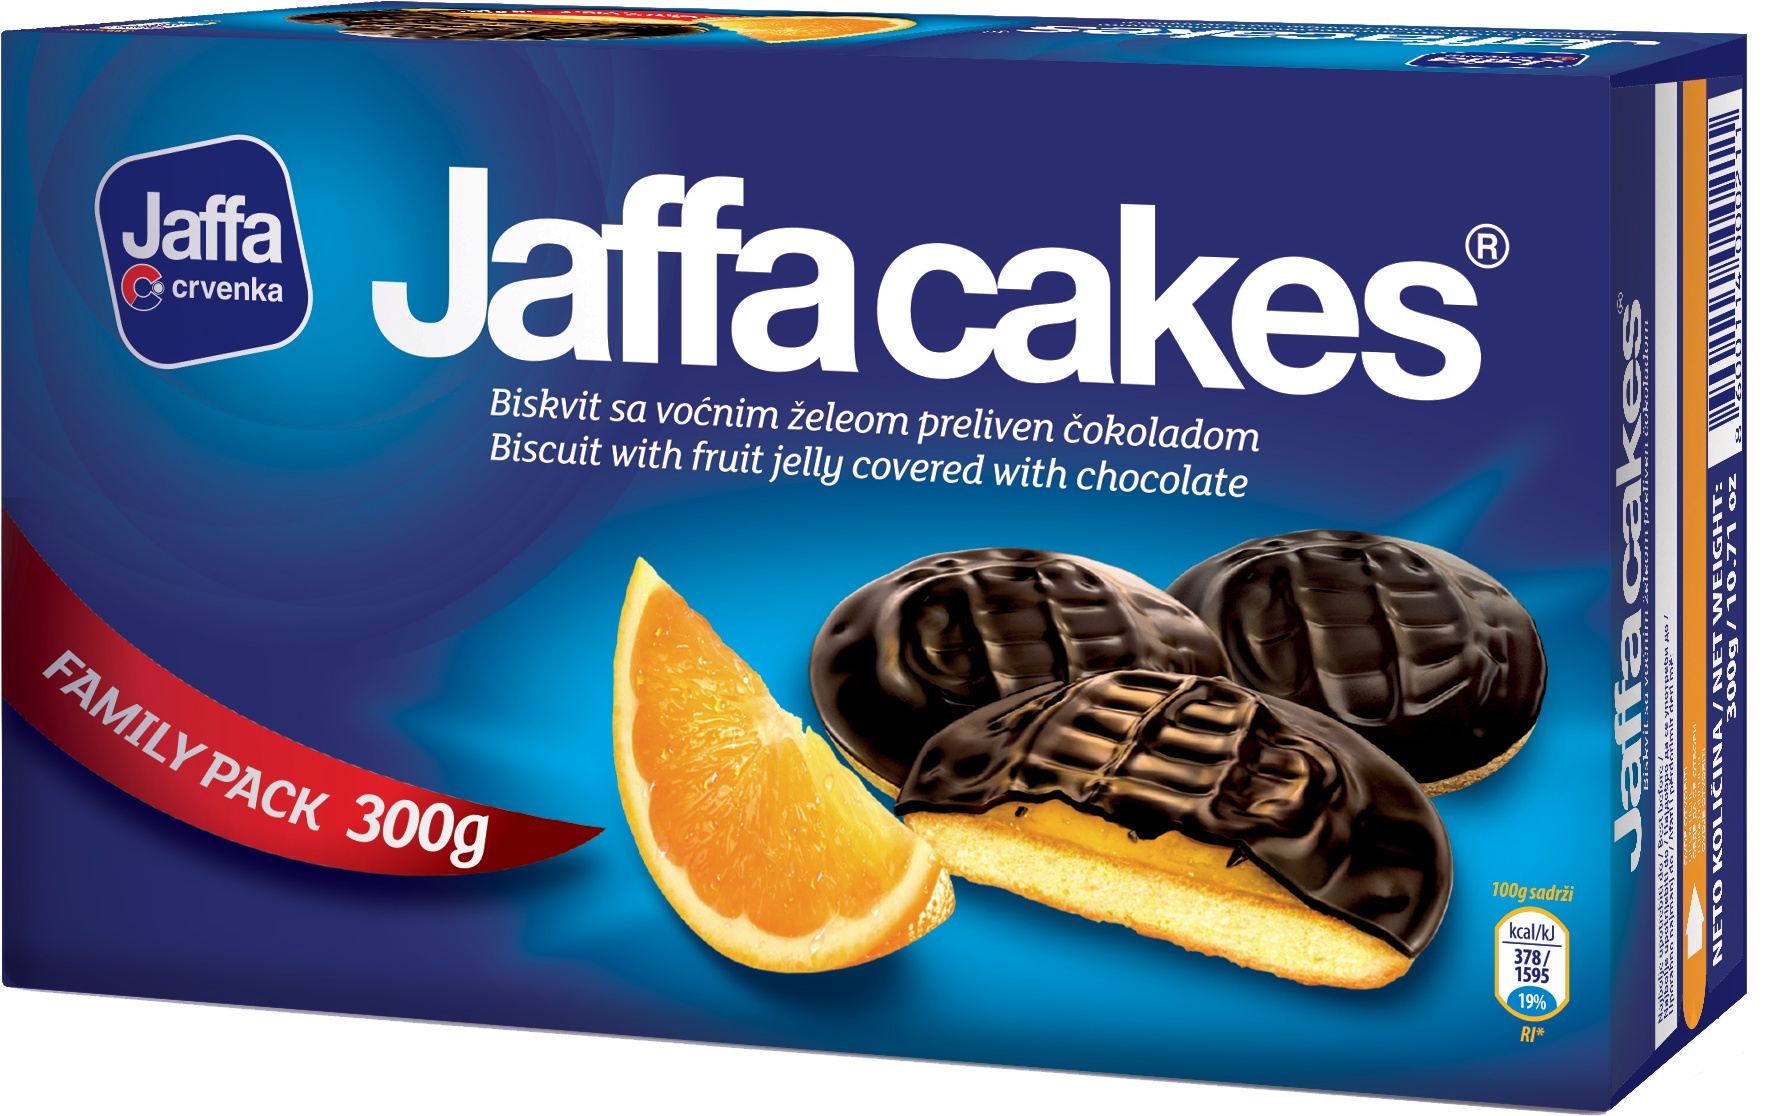 Slika za Jaffa cakes Classic 300g